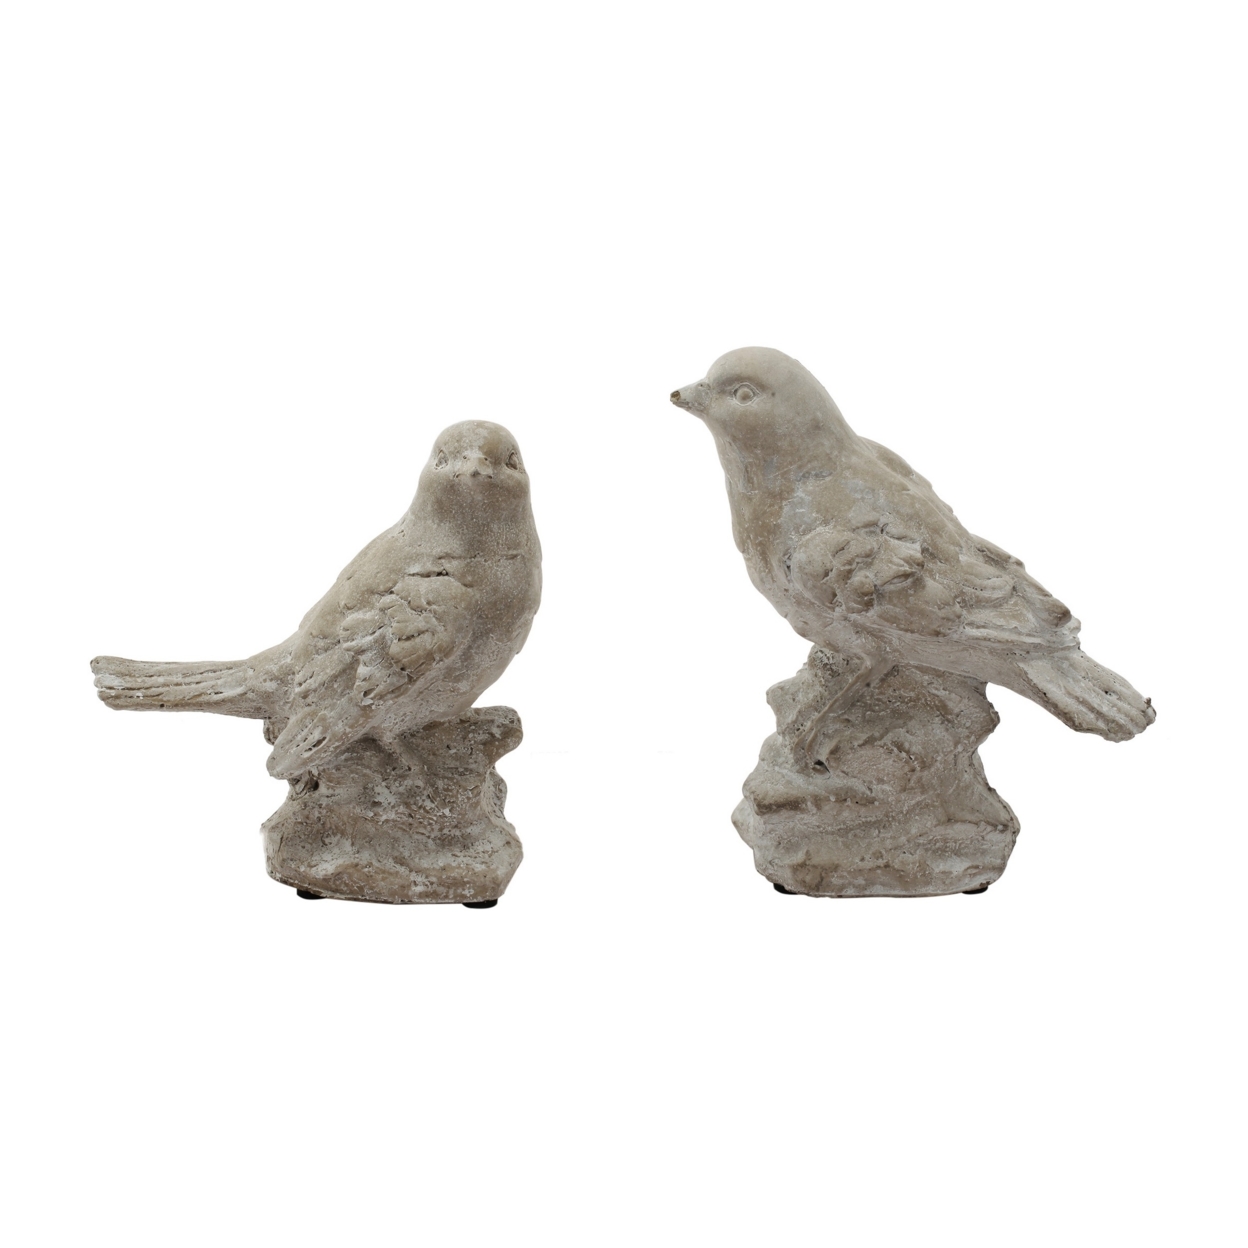 Kima 7 Inch Set Of 2 Perched Birds Accent Decor, Weathered Gray Ceramic- Saltoro Sherpi